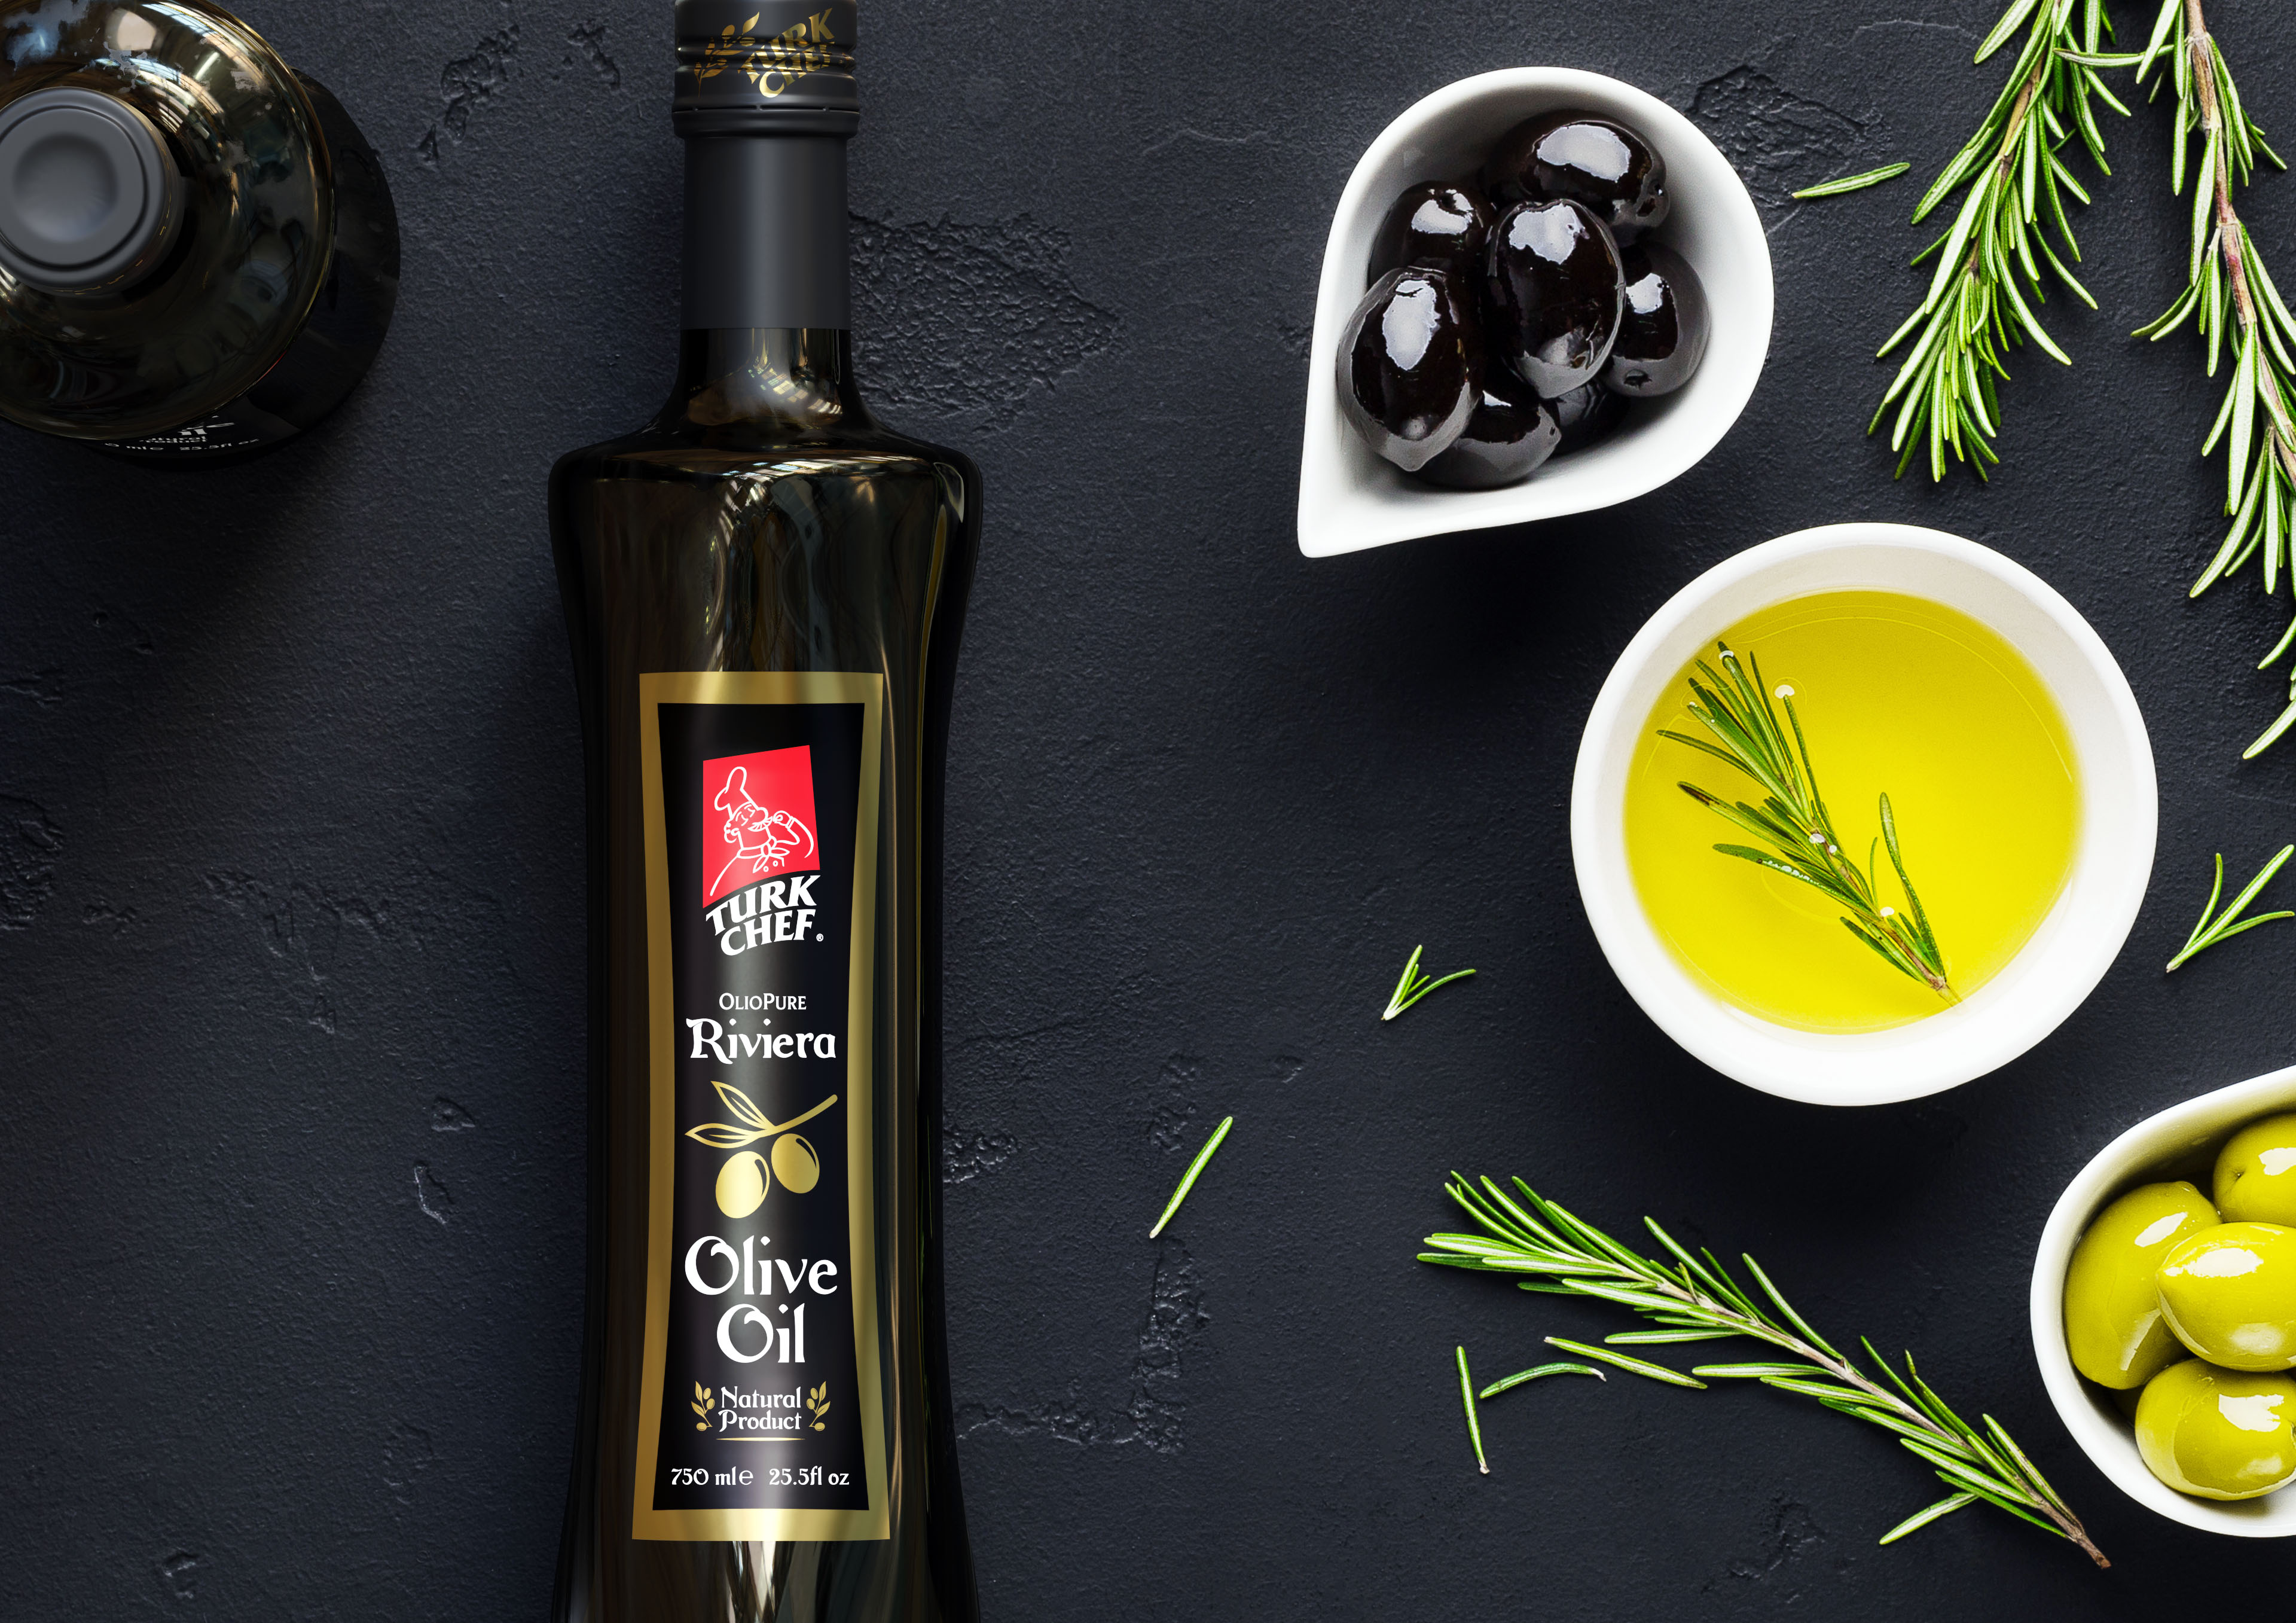 20 оливковое масло. Оливковое масло. Оливки и оливковое масло. Бутылка оливкового масла. Олив Ойл масло оливковое.